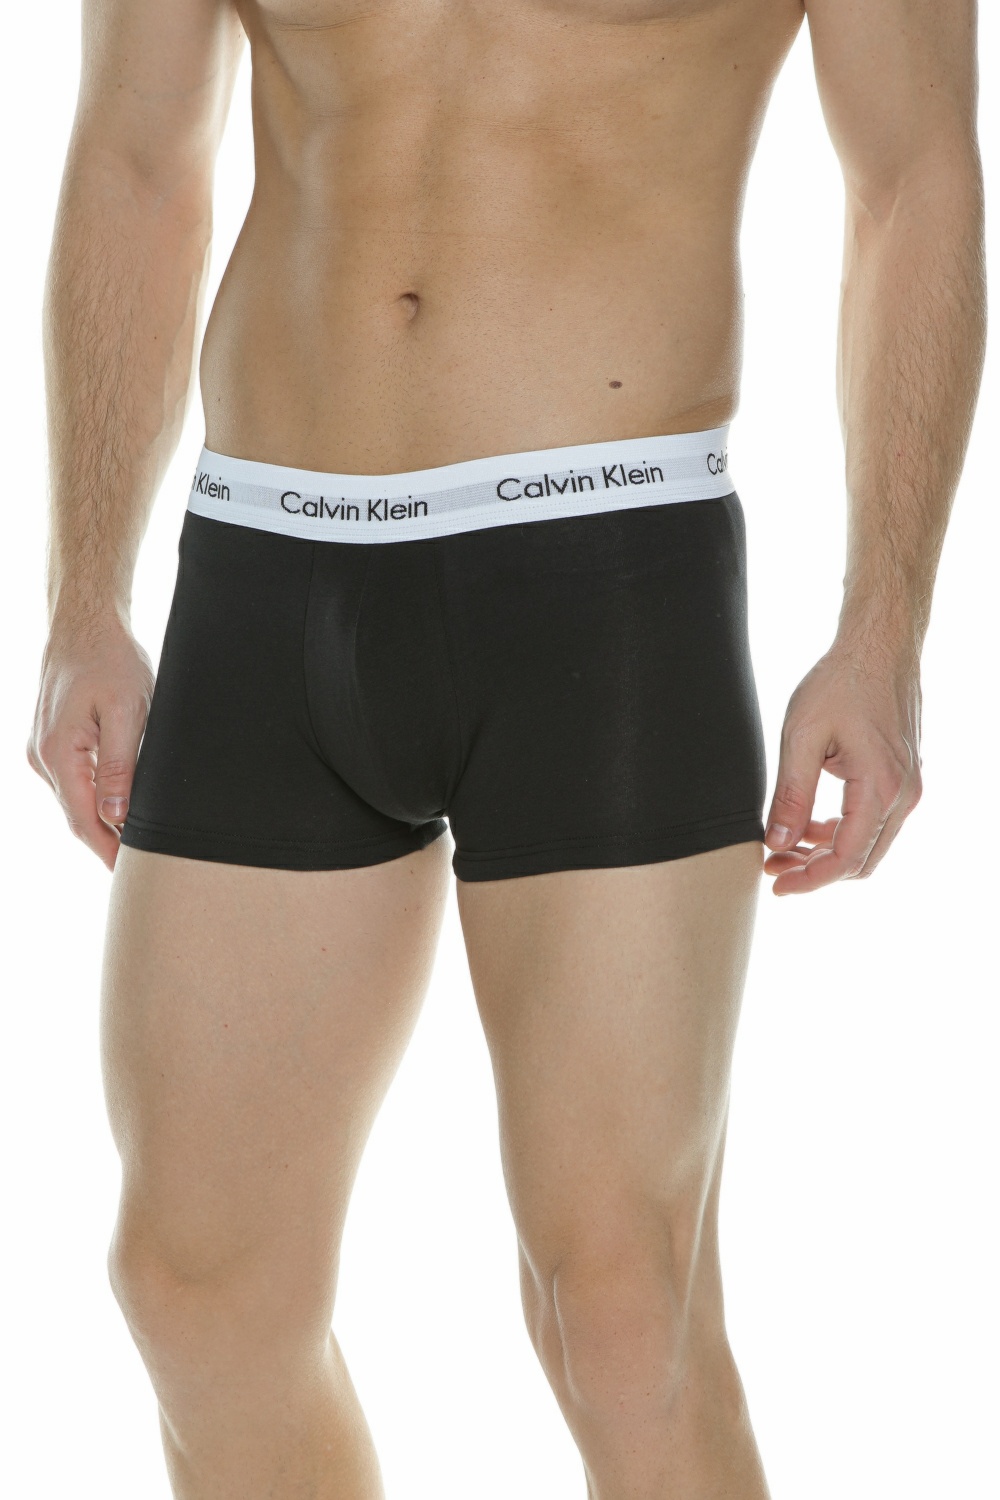 CK UNDERWEAR – Σετ ανδρικά εσώρουχα Calvin Klein Underwear LOW RISE μαύρο γκρι λευκό 1398742.0-9171